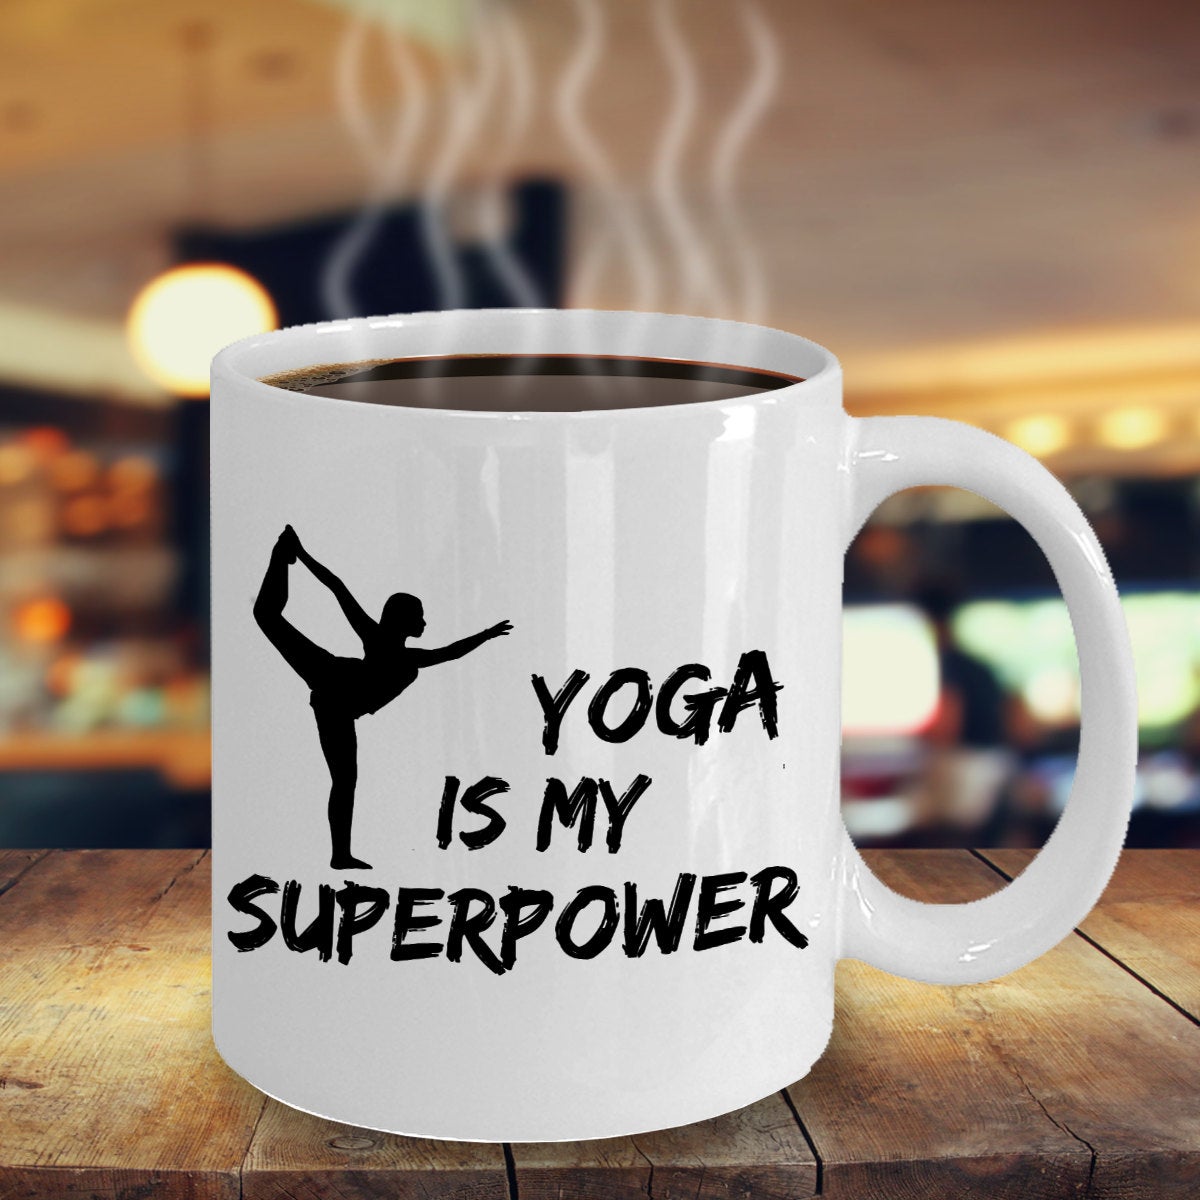 http://trendygearshop.com/wp-content/uploads/2019/12/funny-yoga-mug-this-superpower-mug-is-perfect-yoga-gift-give-our-super-power-mug-as-yoga-inspired-gifts-or-enjoy-yoga-coffee-mug-yourself-5e07895c.jpg